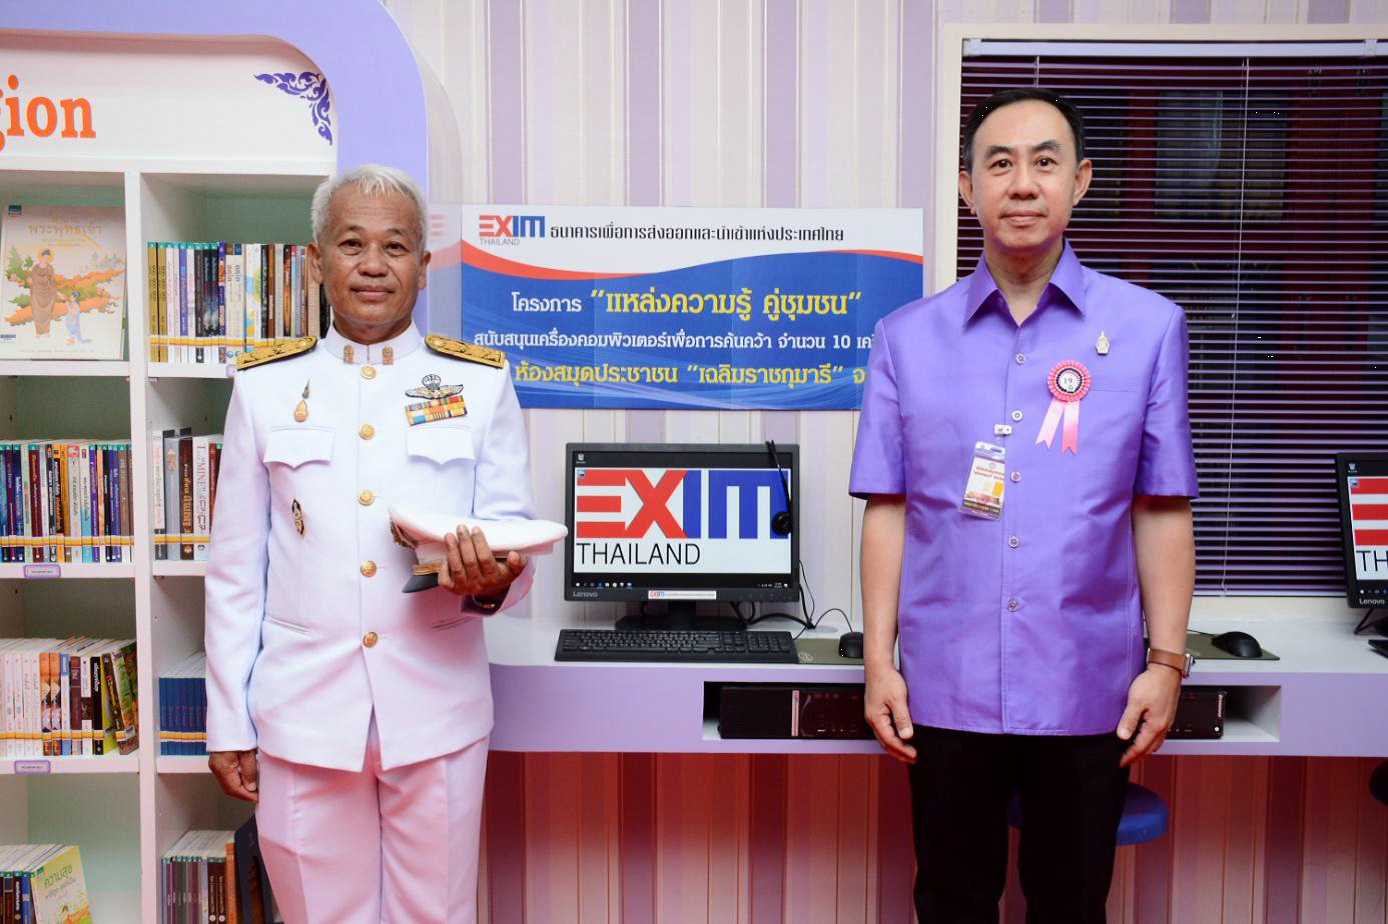 EXIM Thailand Donates Computers to “Chalerm Rajakumari” Public Library in Loei